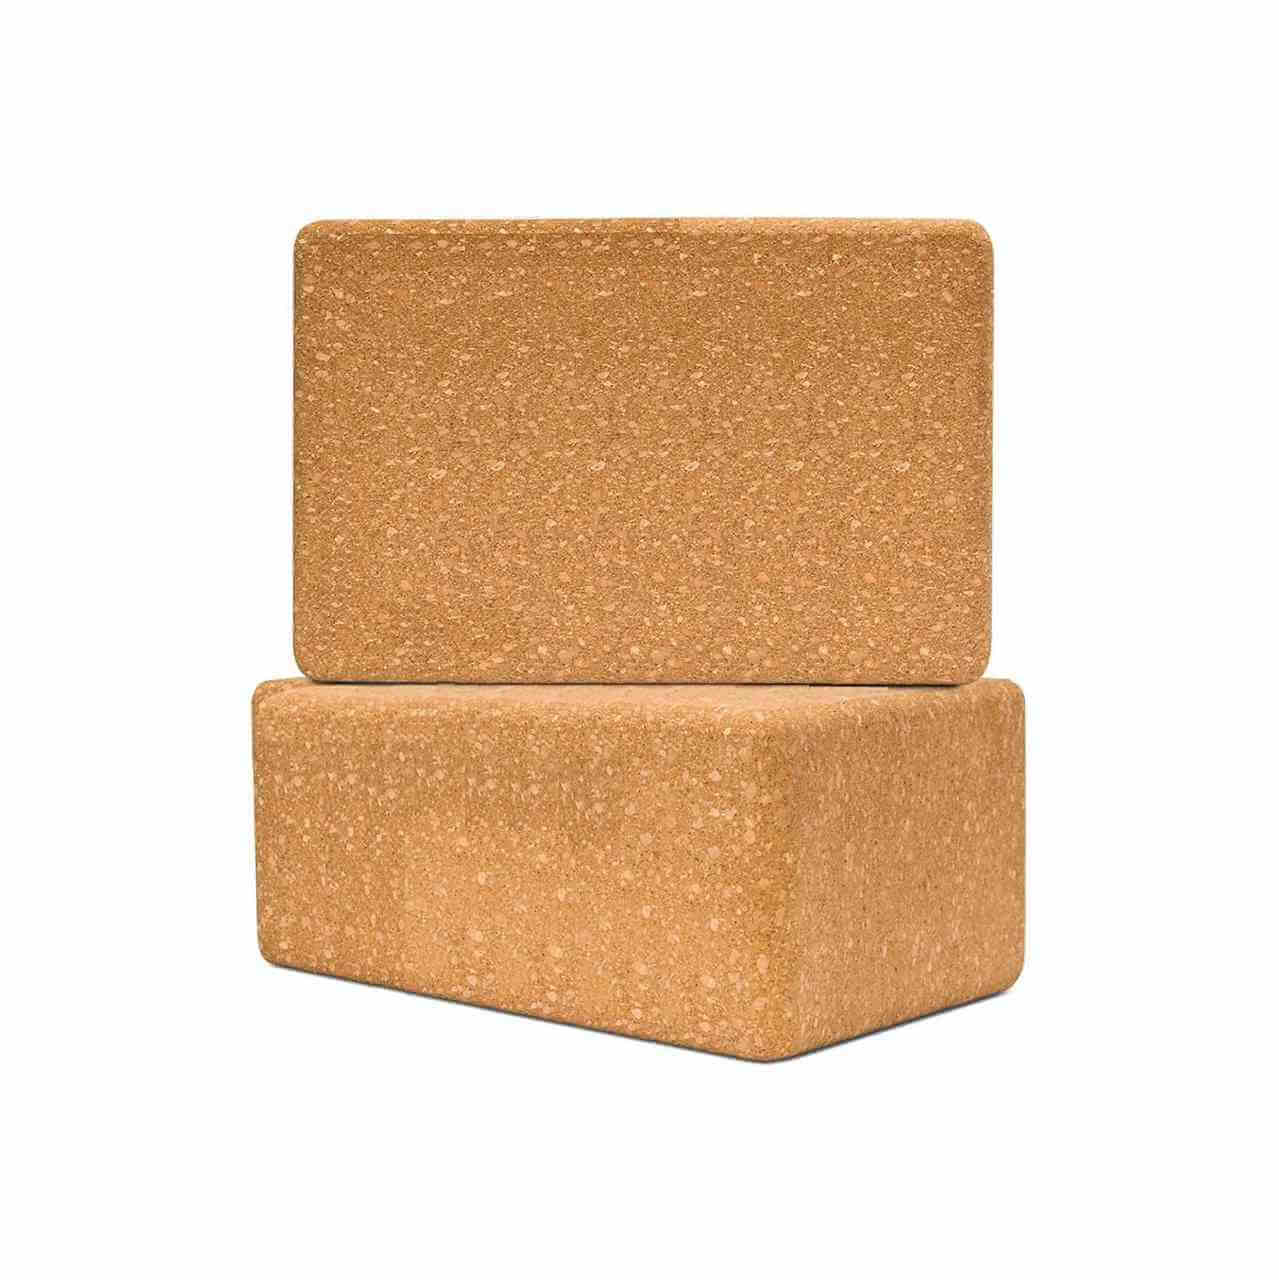 Cork blocks for yoga - Yoga block in cork, environmentally